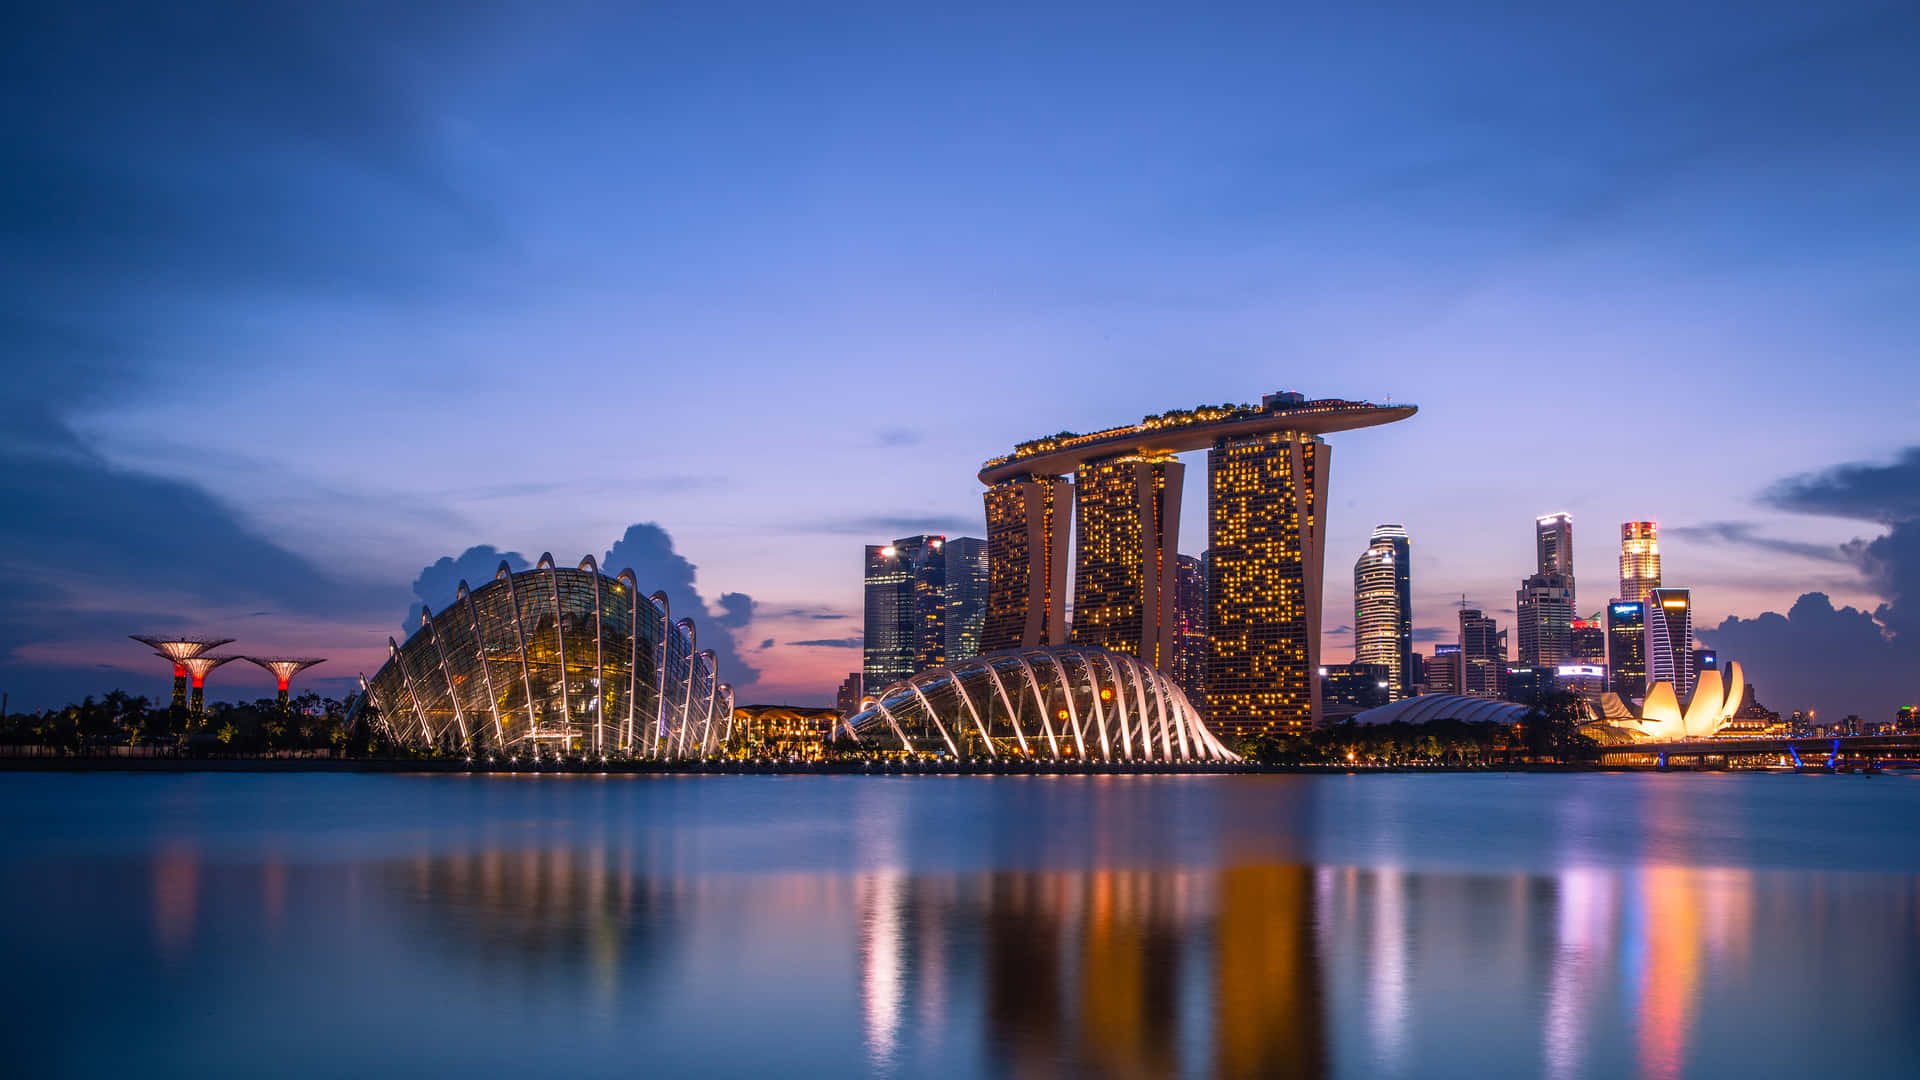 Vackernattstadsbild Av Singapore